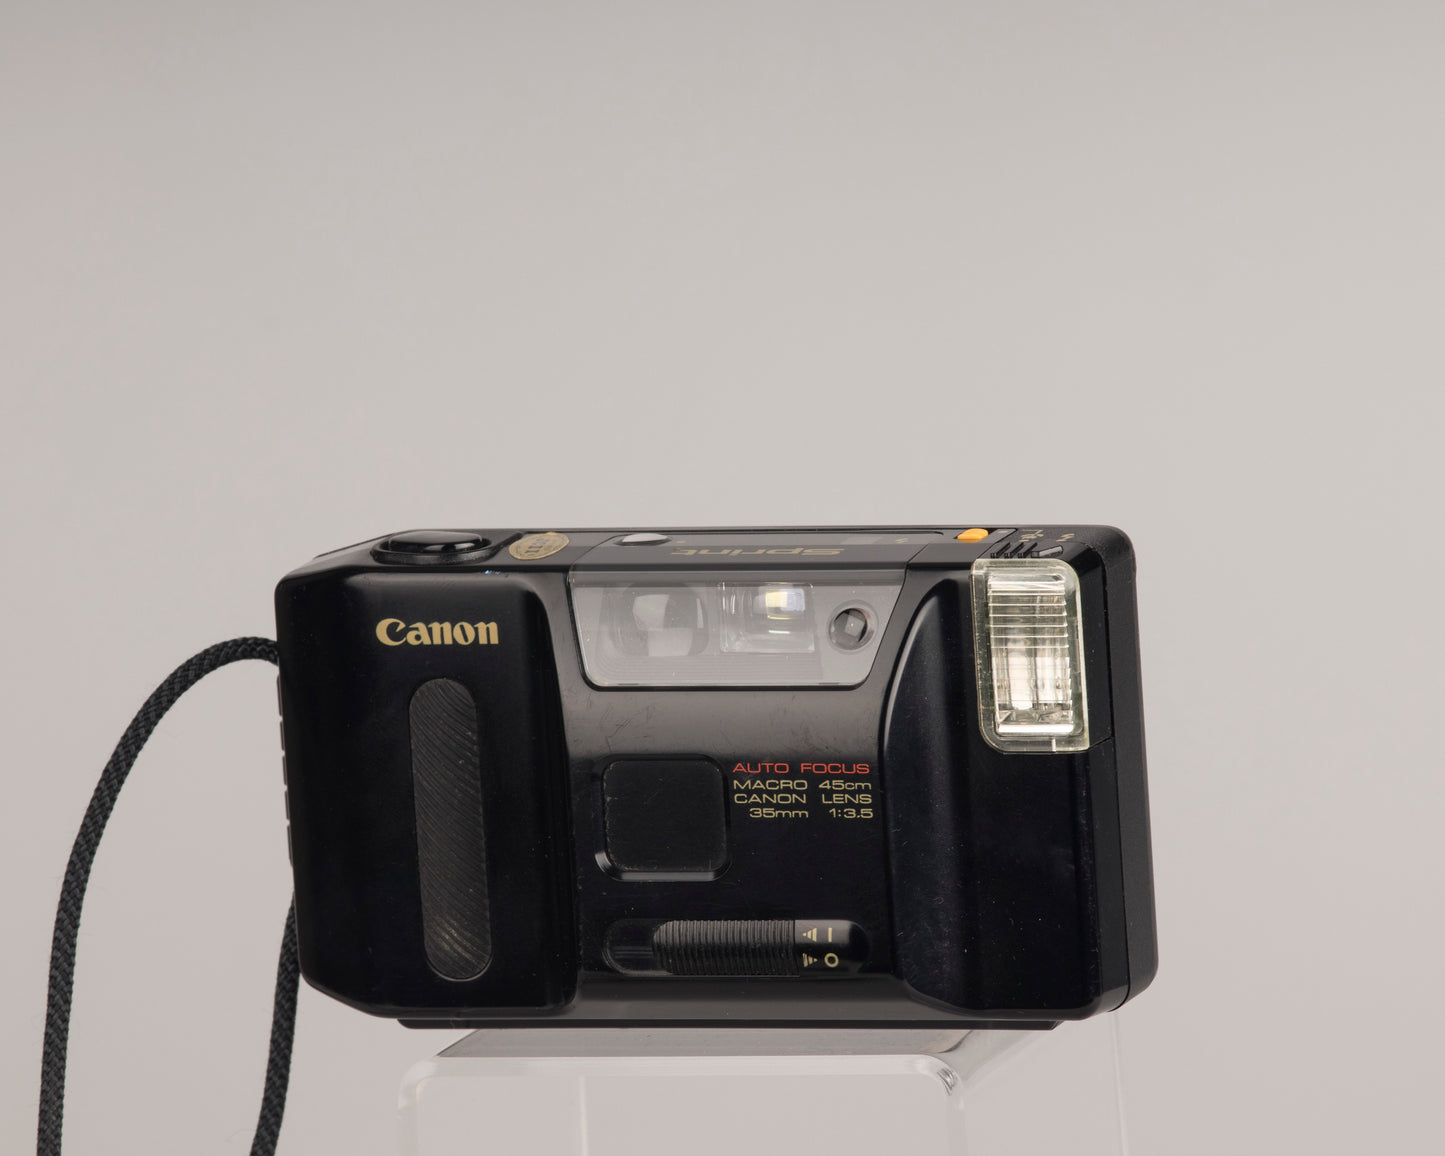 Canon Sprint 35mm camera